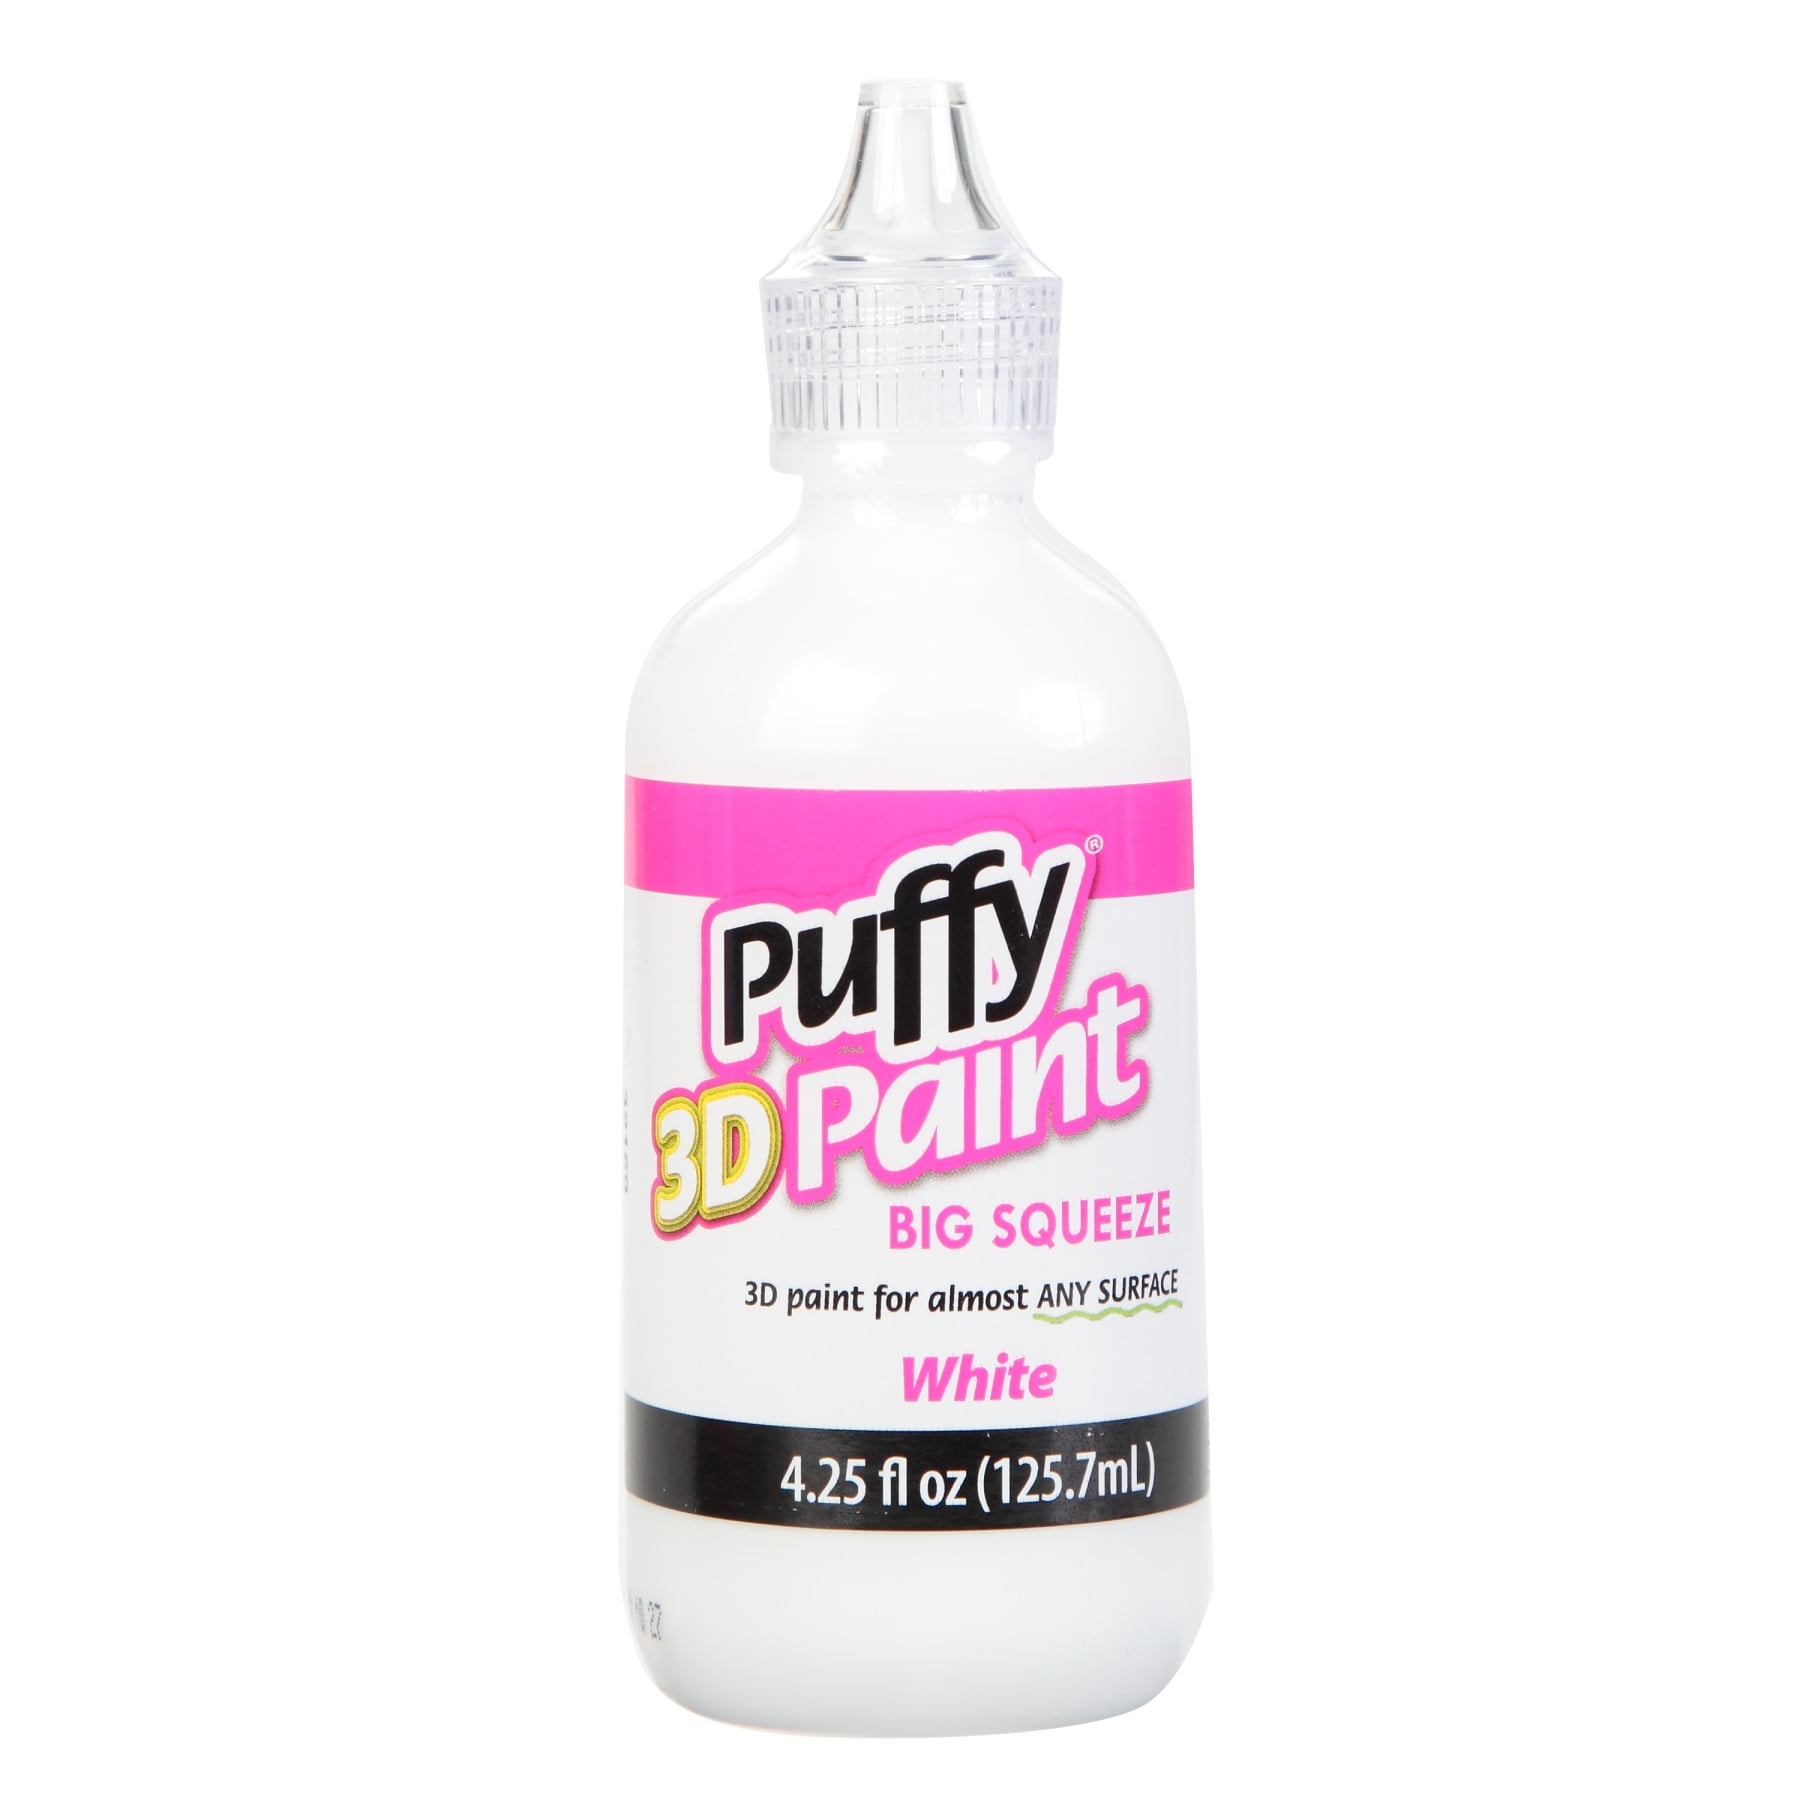 Puffy 4.25 fl oz 3D Paint White, Dries Permanent, Multi-Surface